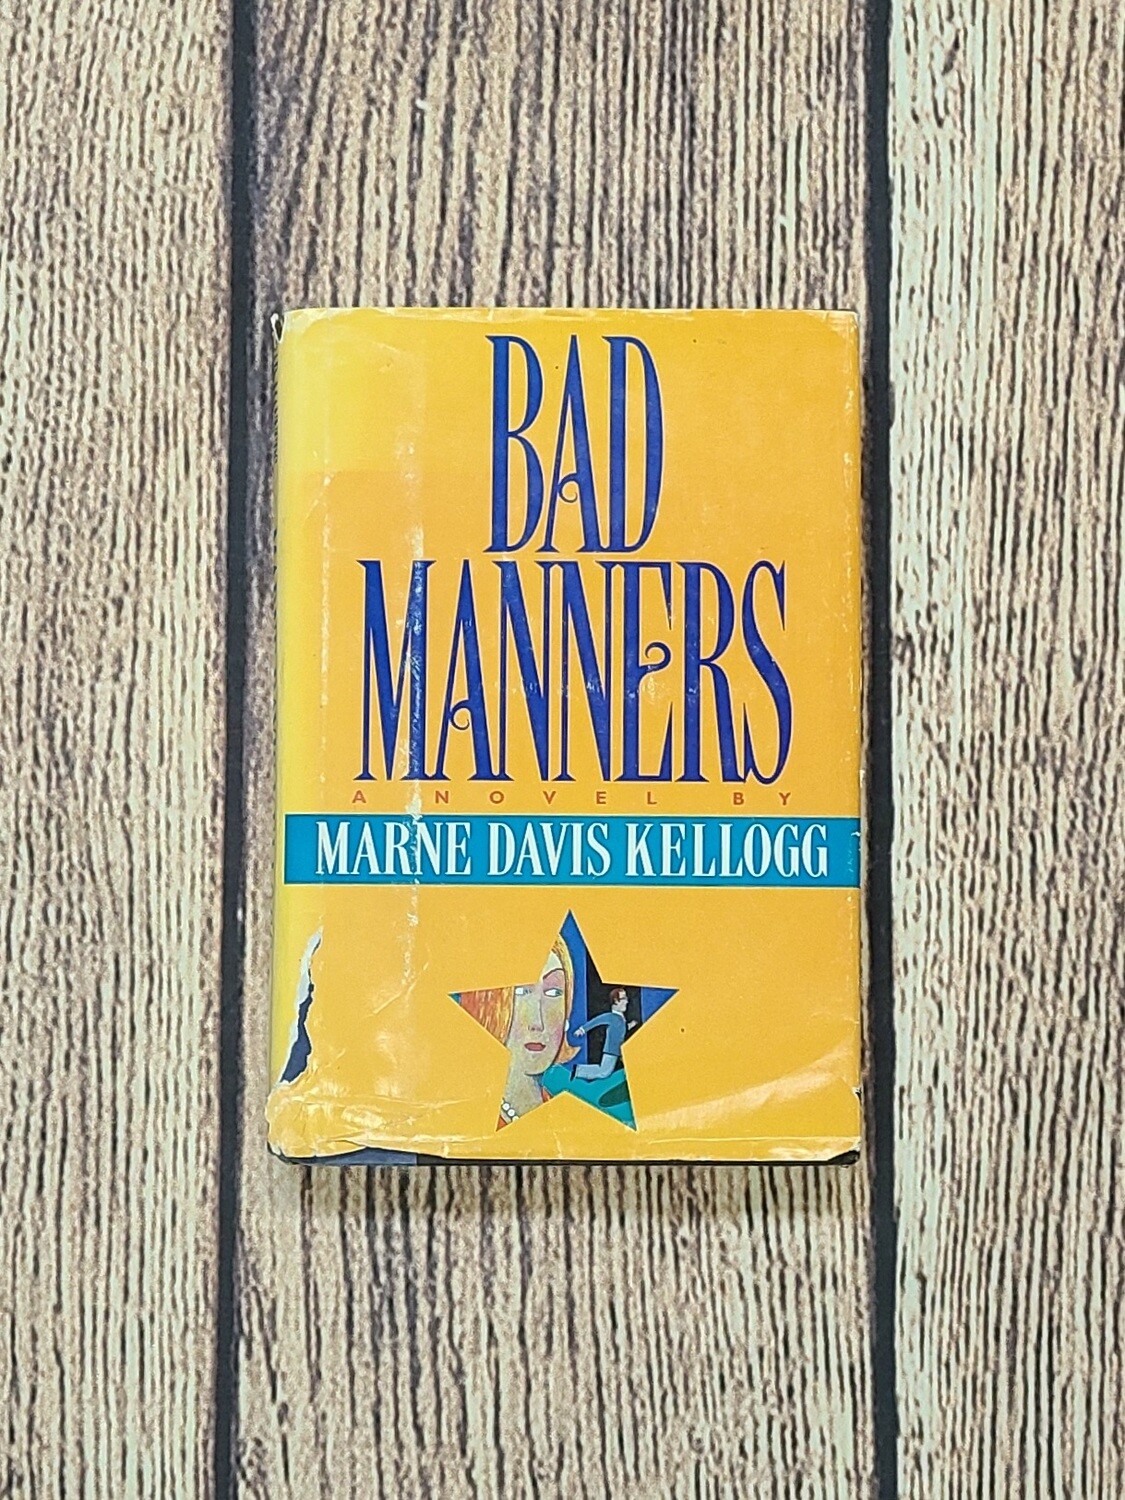 Bad Manners by Marne Davis Kellogg